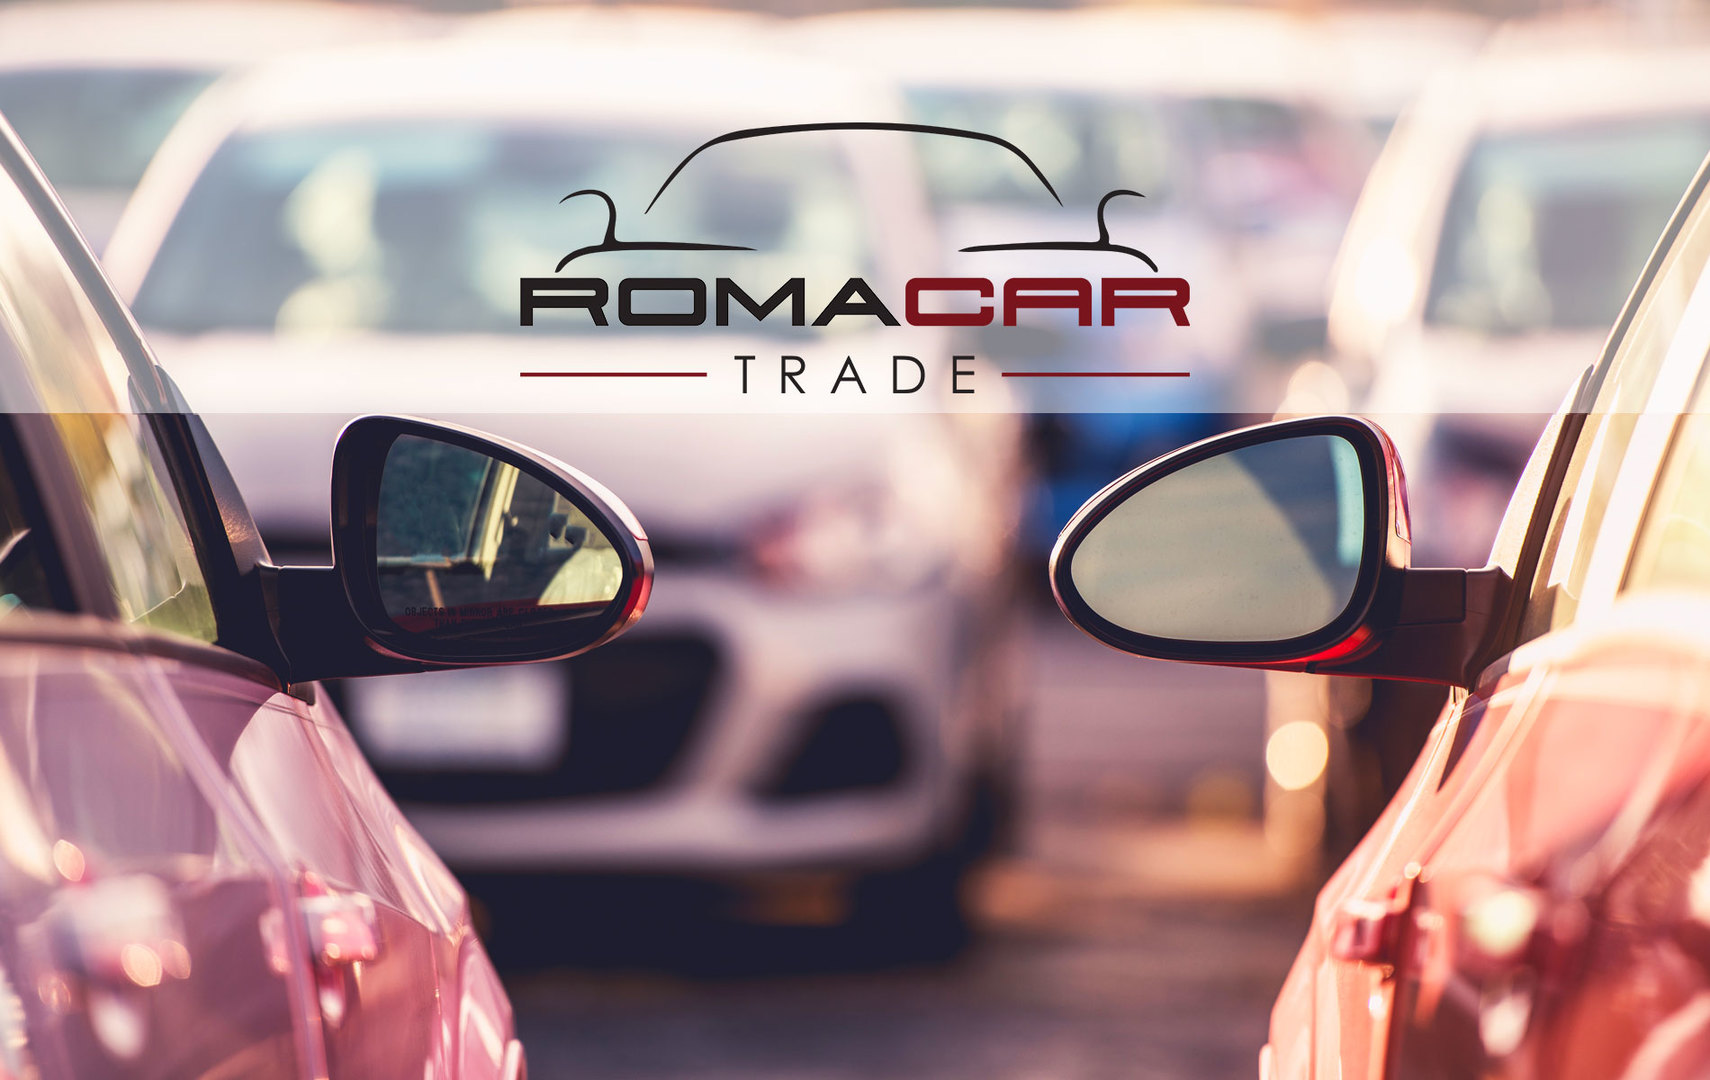 peugeot-roma-car-trade